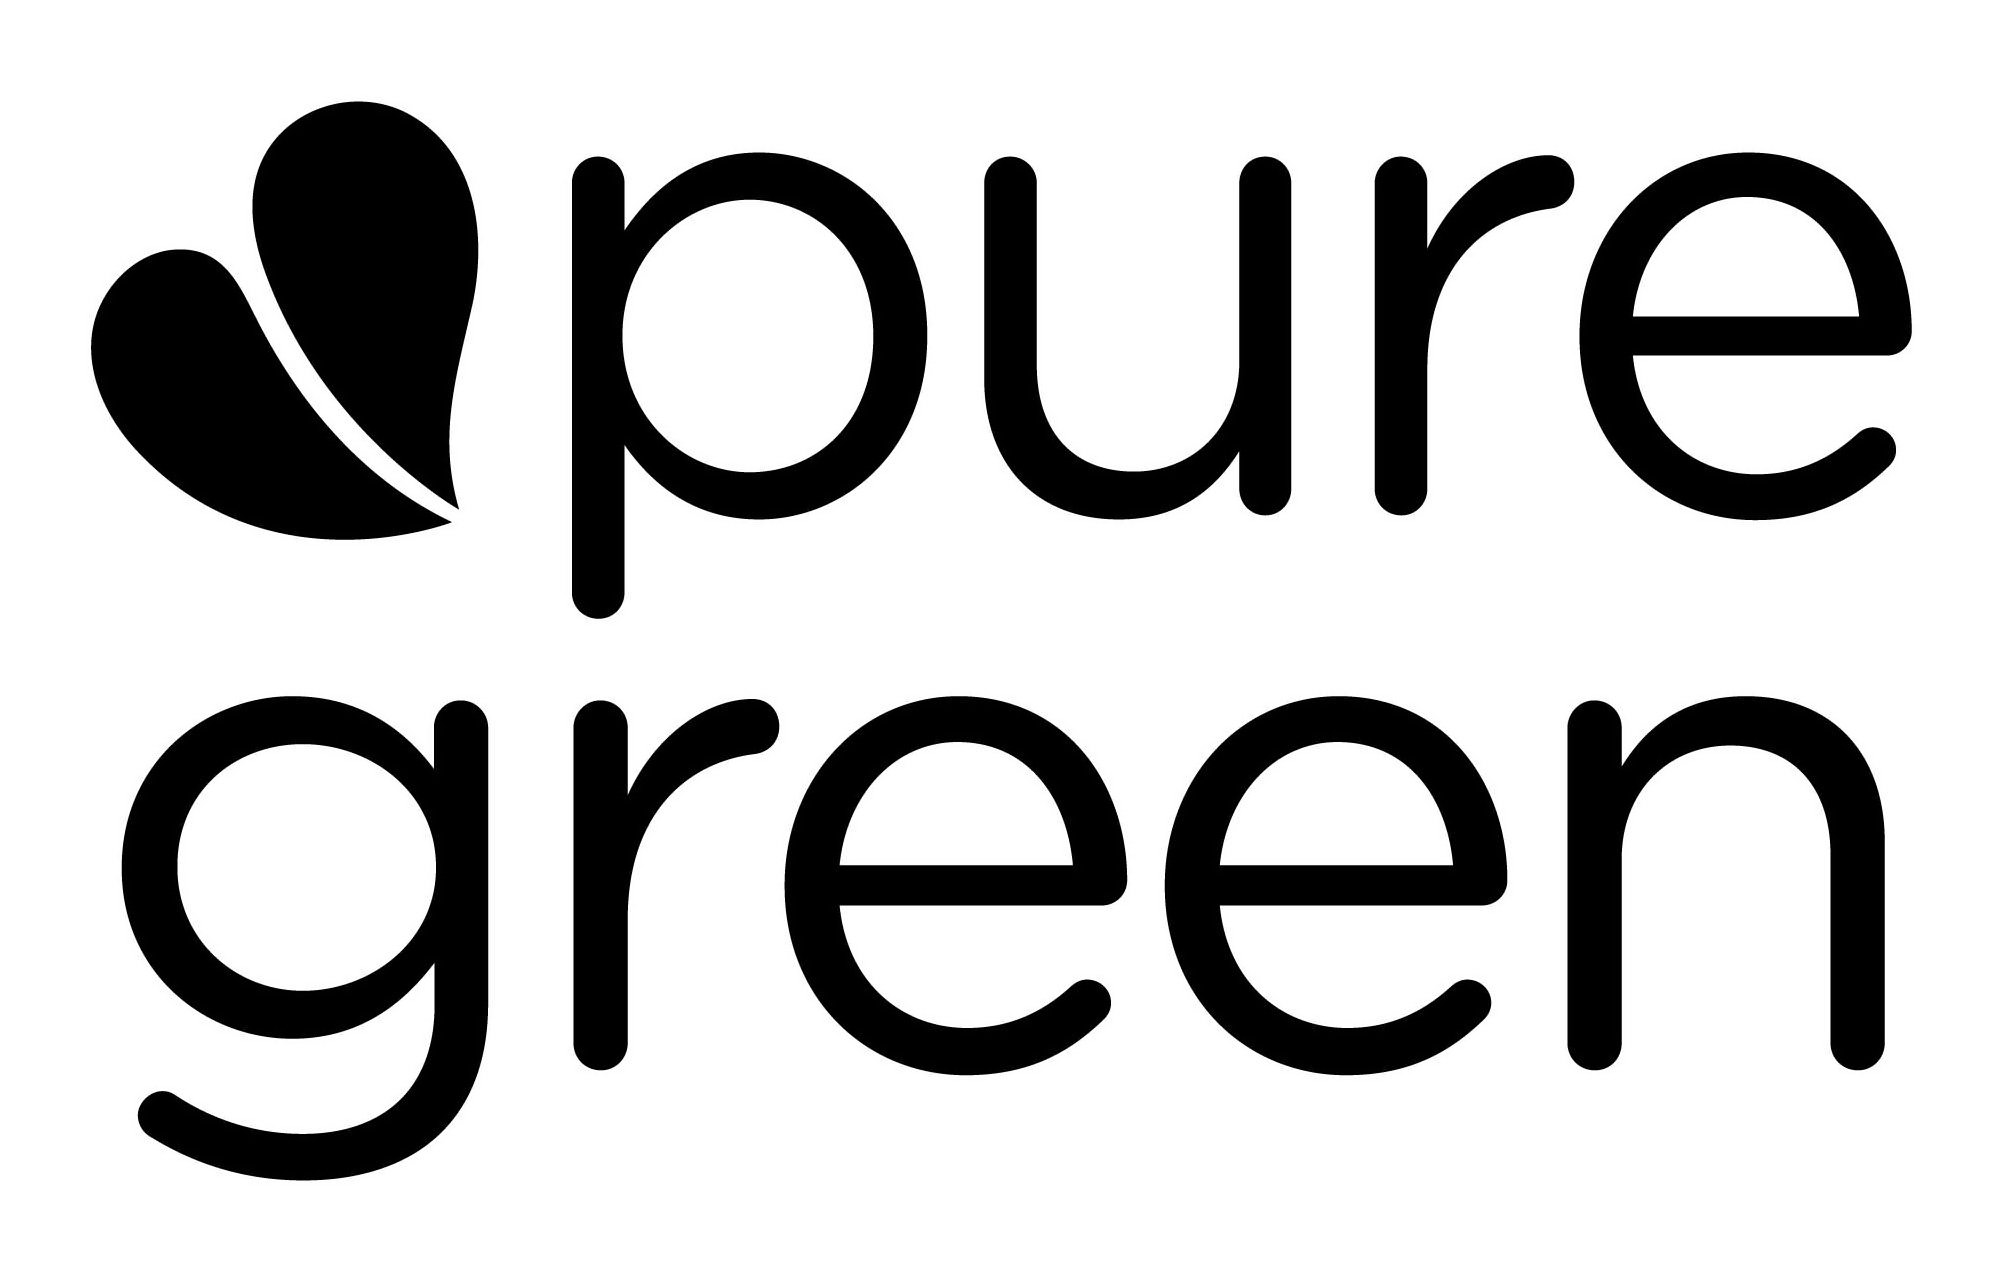 Trademark Logo PURE GREEN